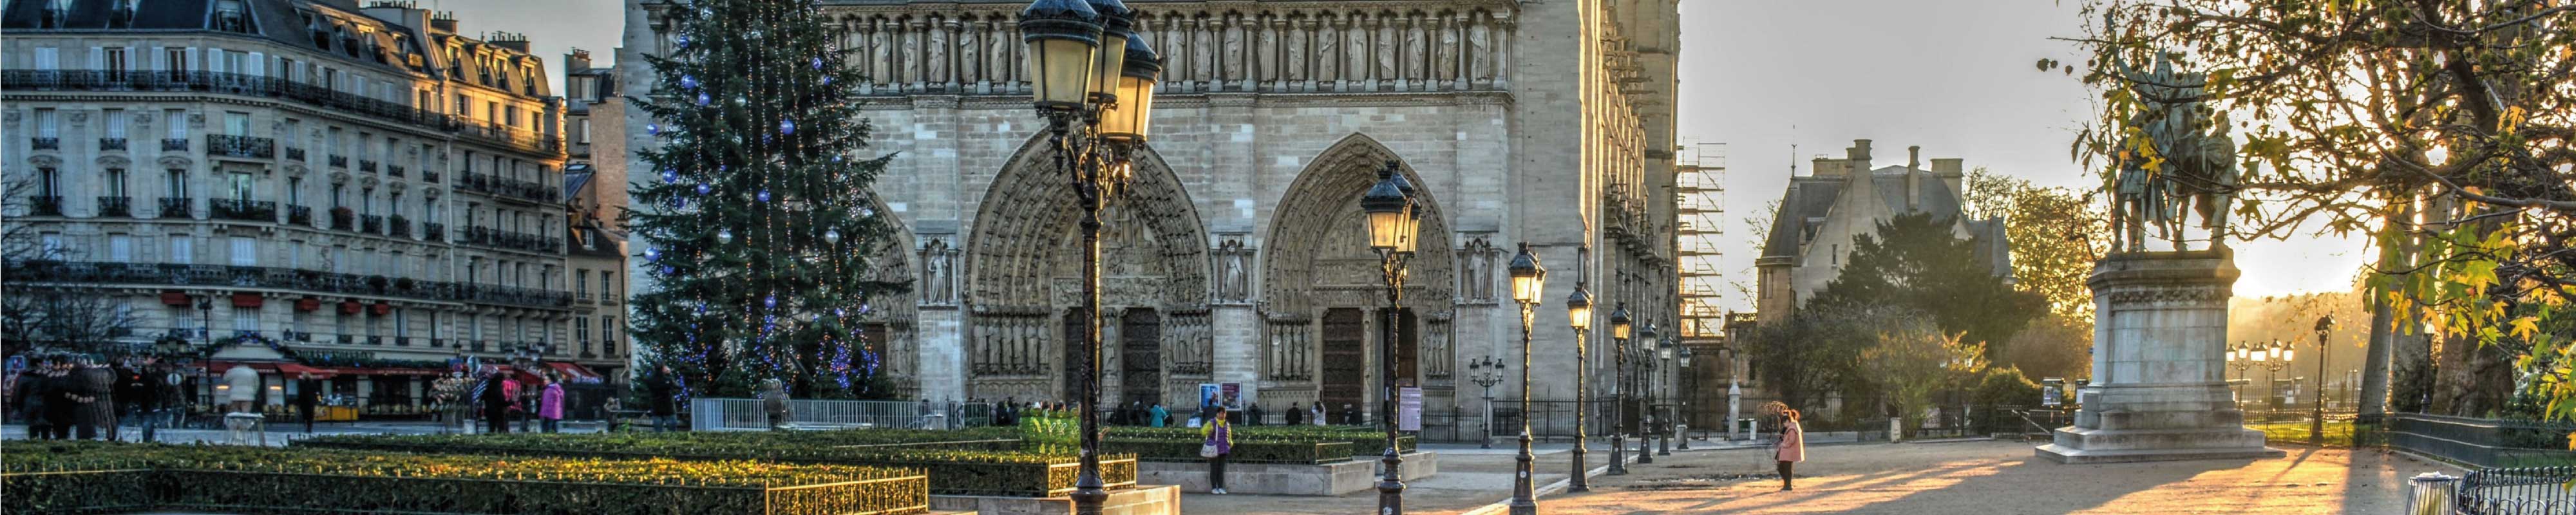 Luggage Storage | Notre Dame in Paris - Nannybag